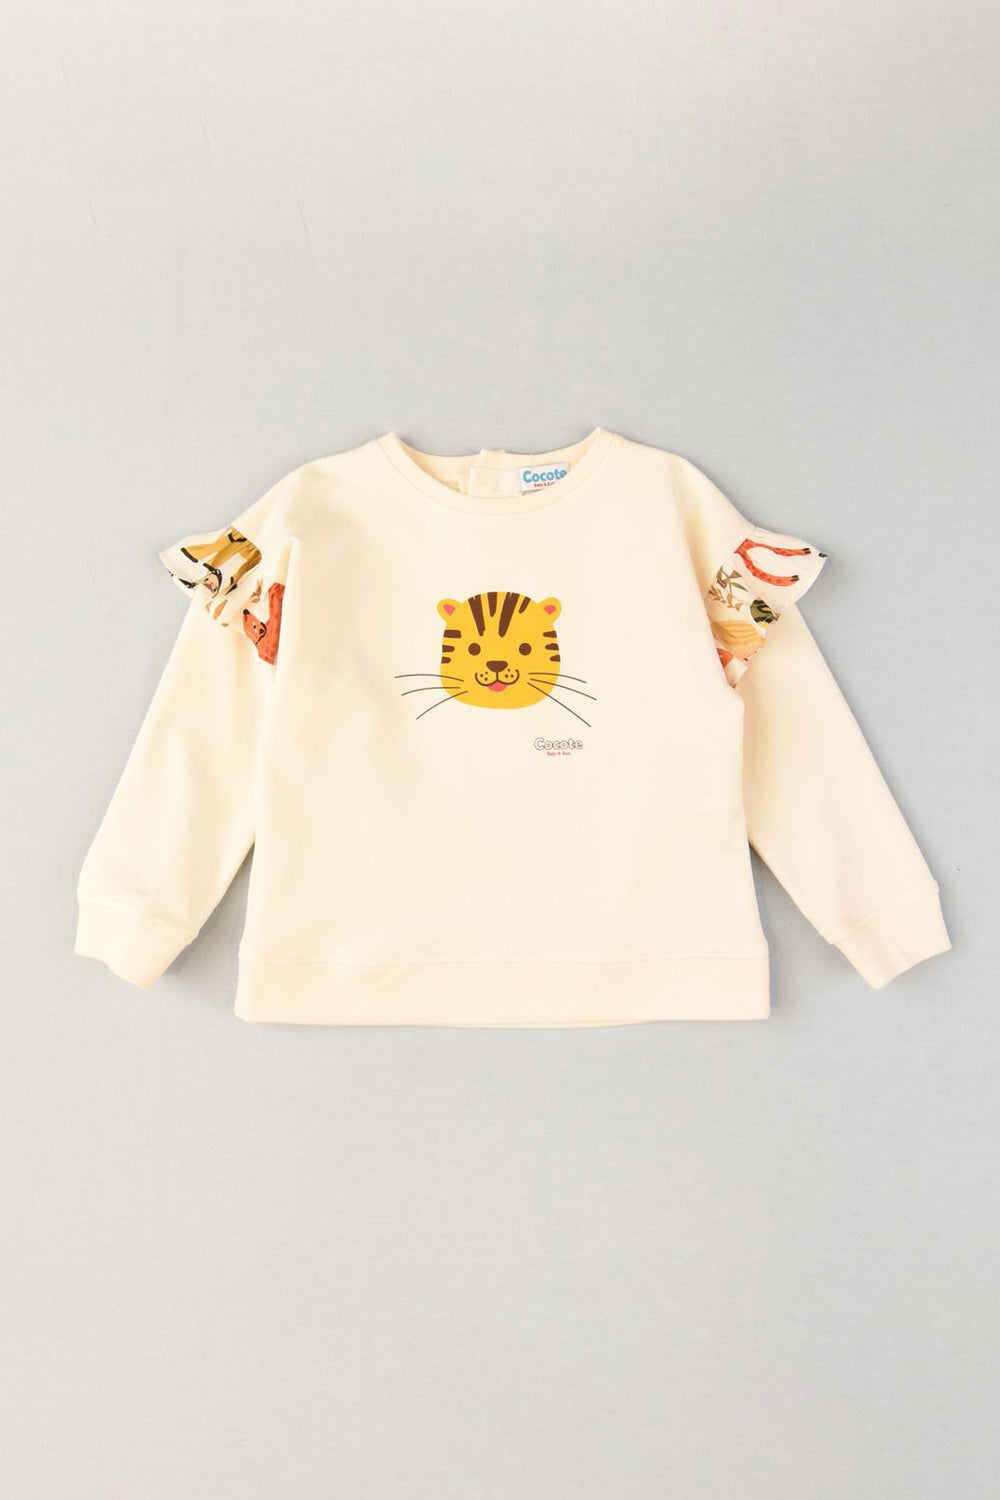 Cocote "Bronte" Cream Tiger Sweatshirt | Millie and John